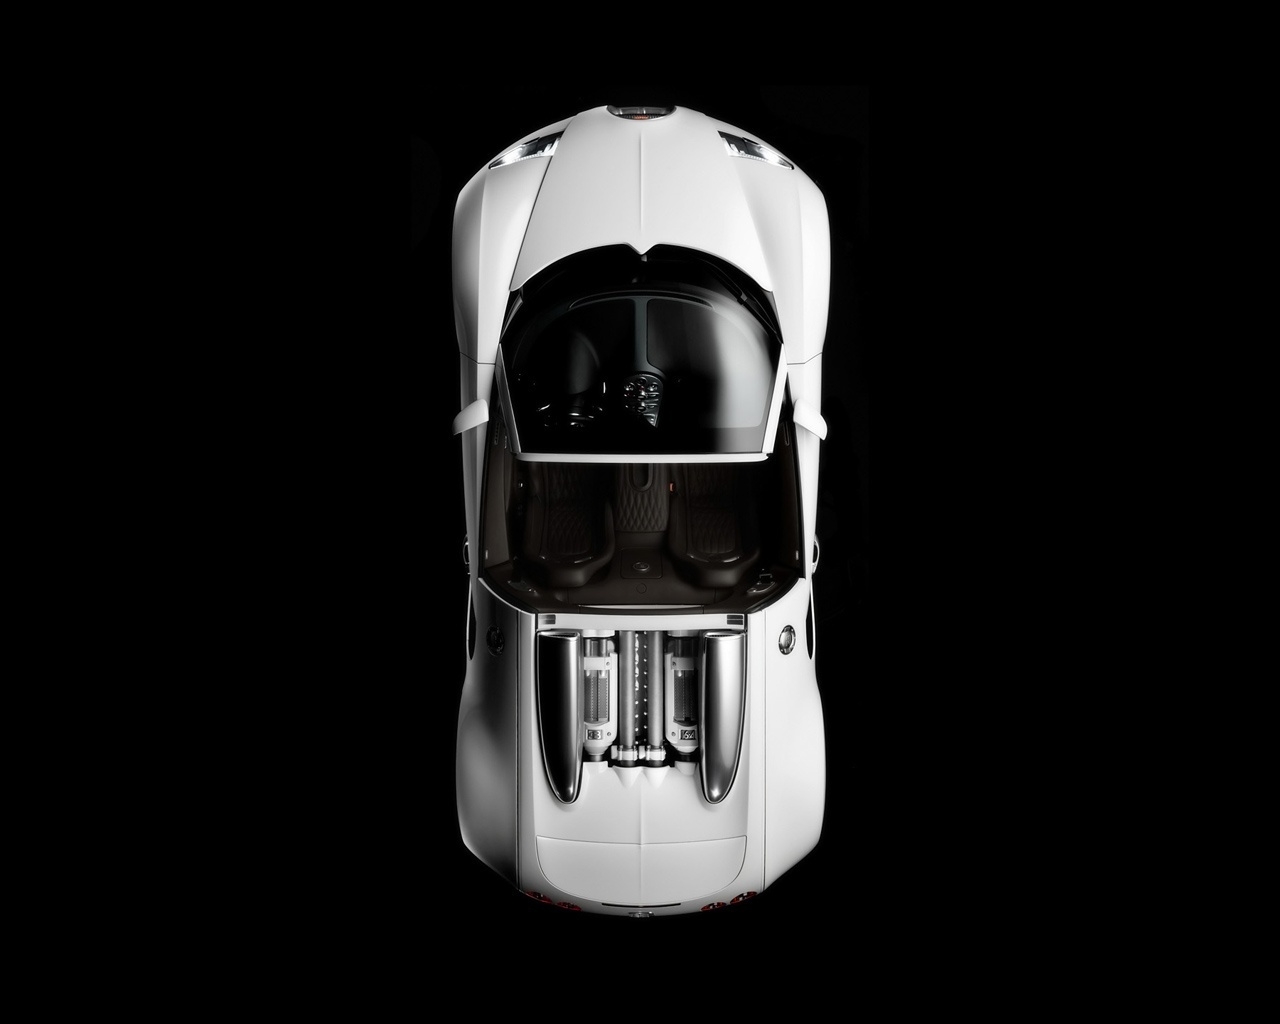 Bugatti Veyron 16.4 Grand Sport Production Version 2009 - Studio Top for 1280 x 1024 resolution